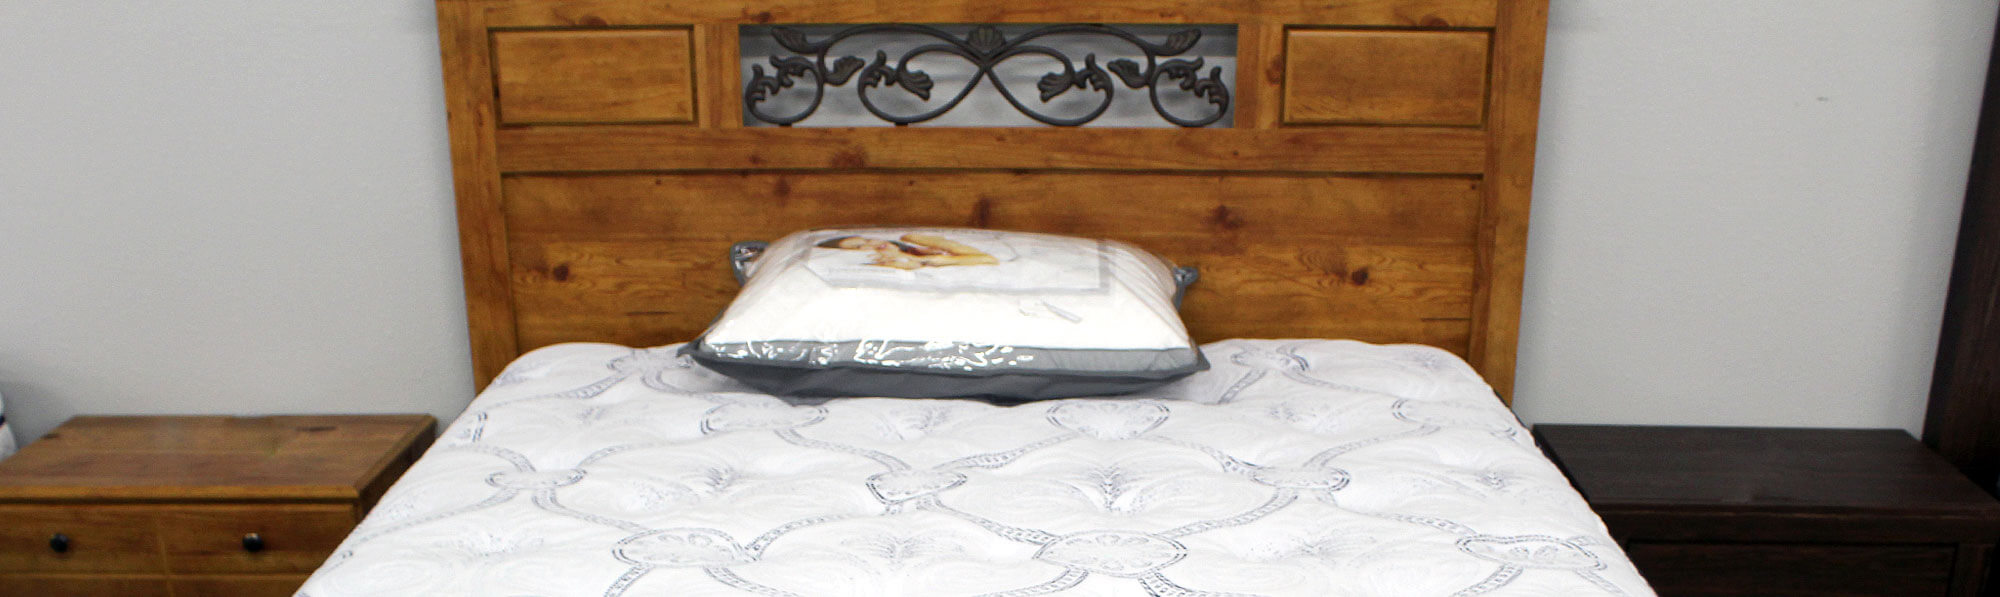 High-end symbol mattress with bedroom set